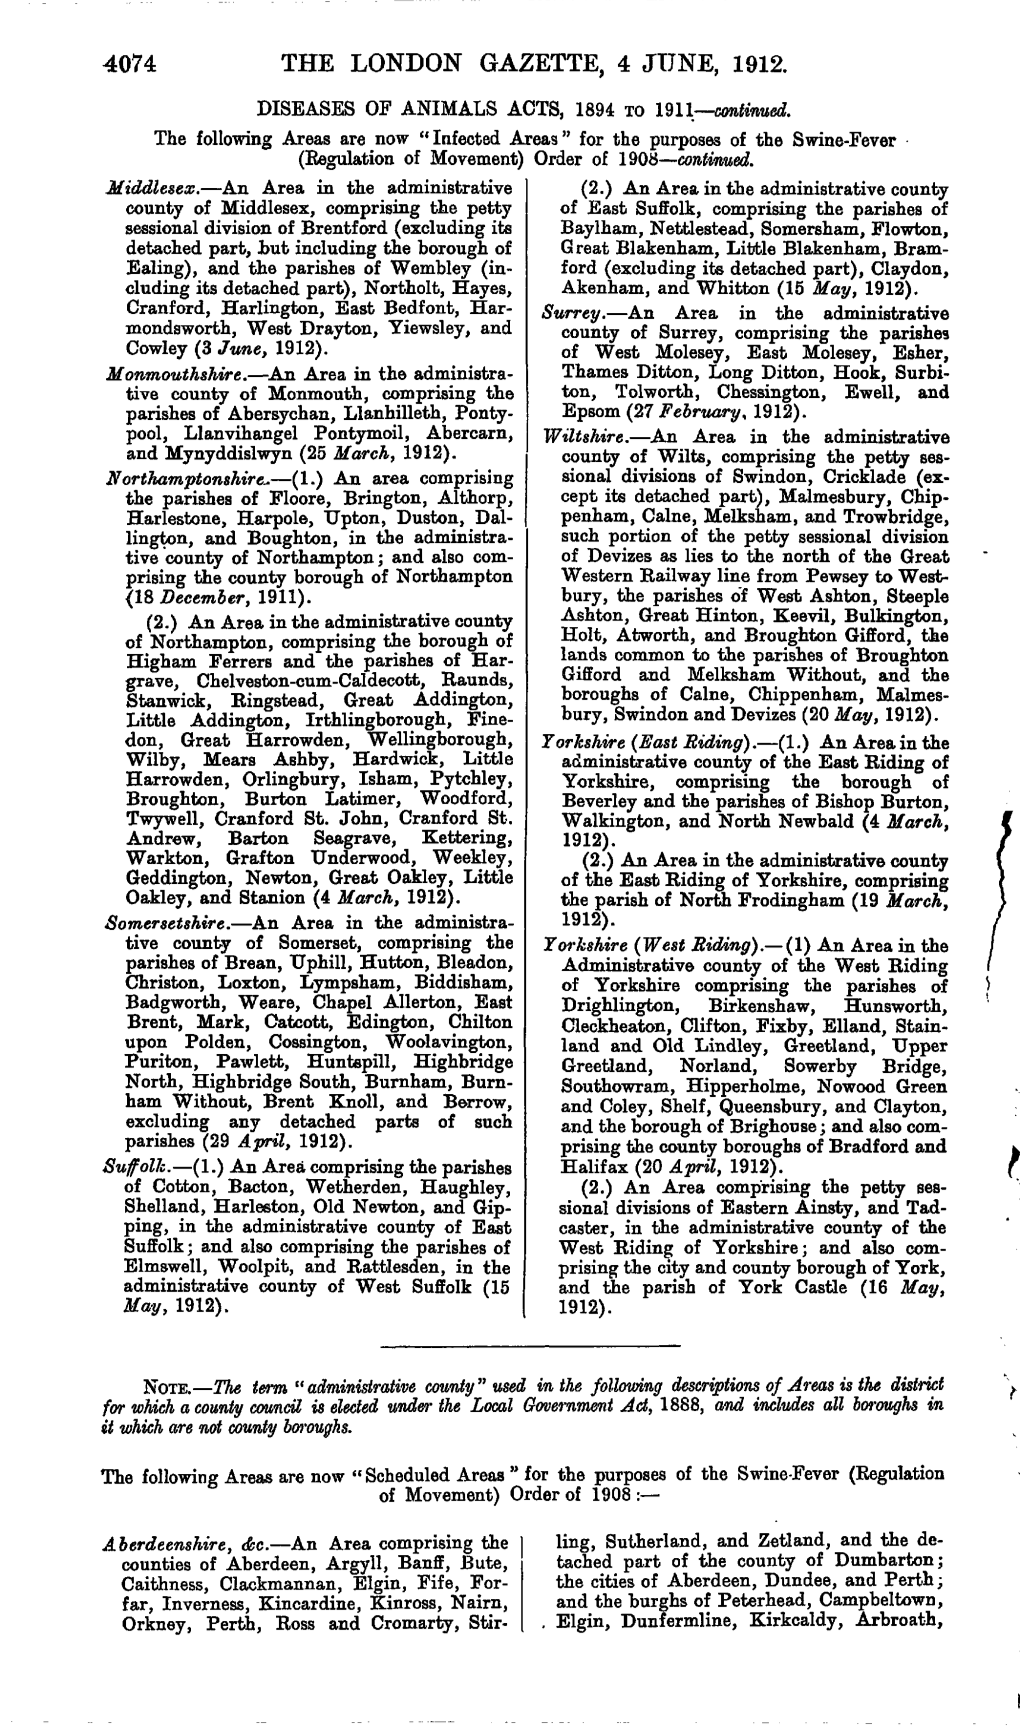 The London Gazette, 4 June, 1912